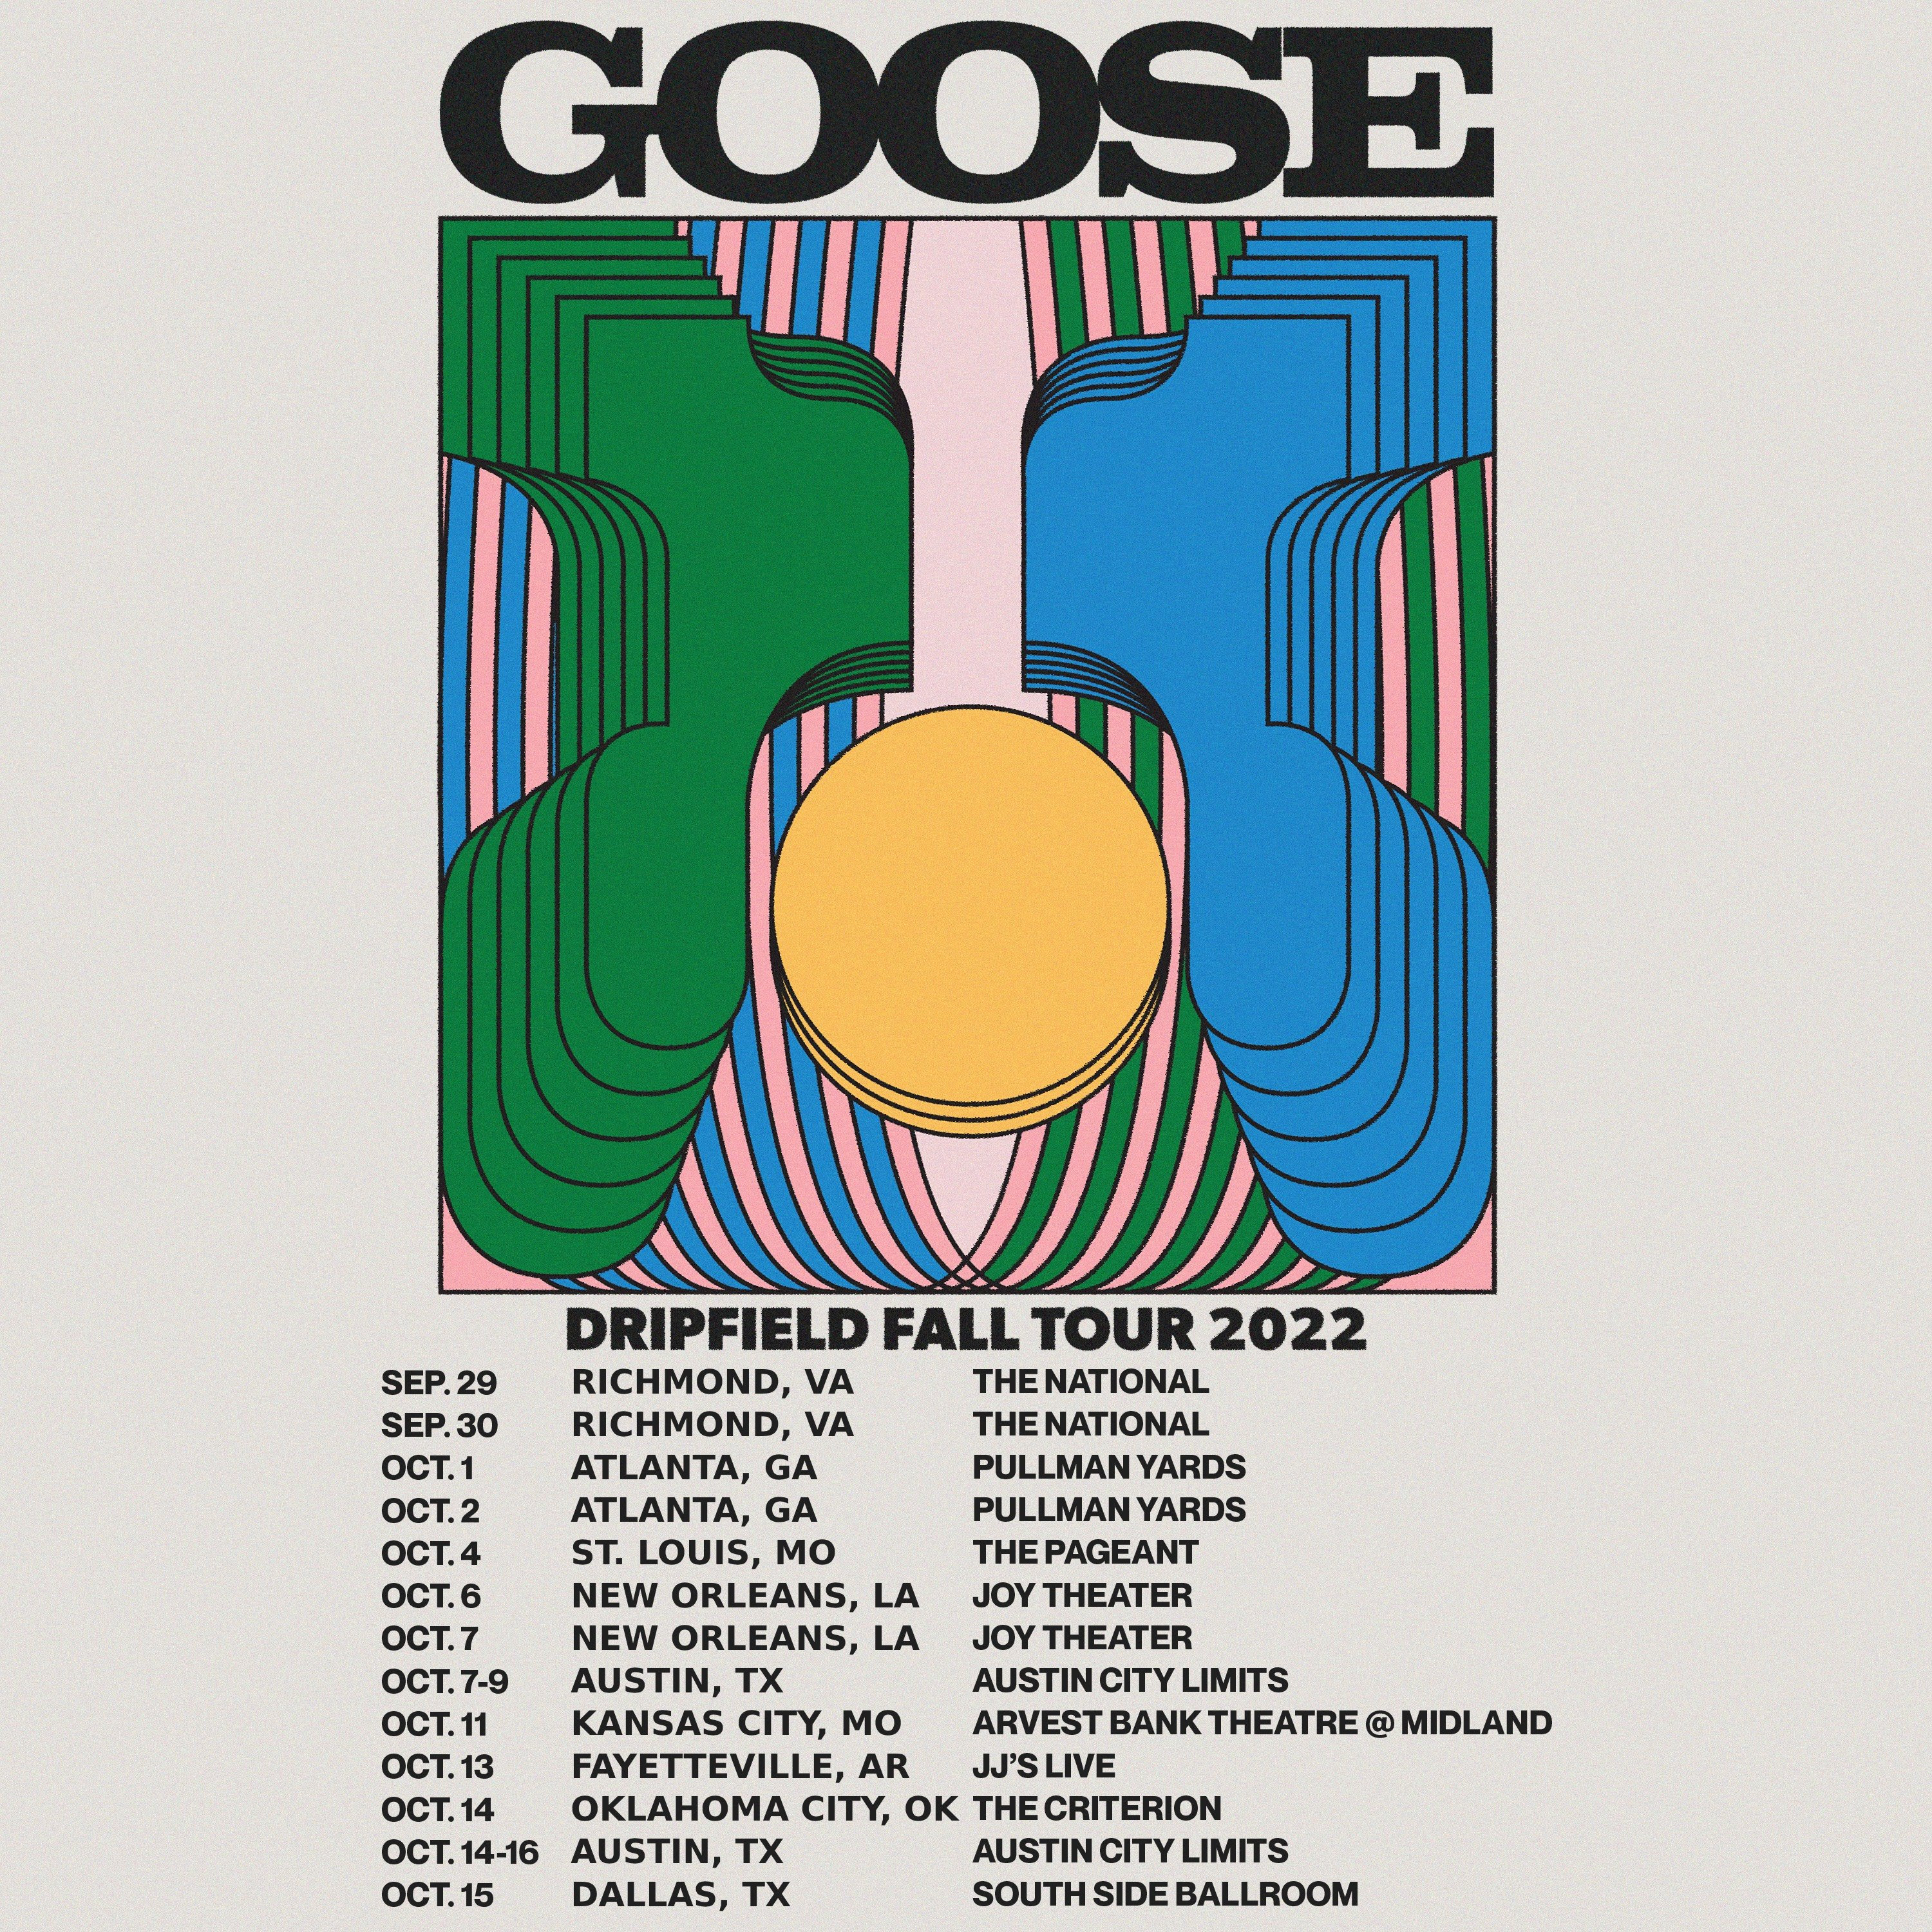 Goose Announces "Dripfield Fall Tour 2022"